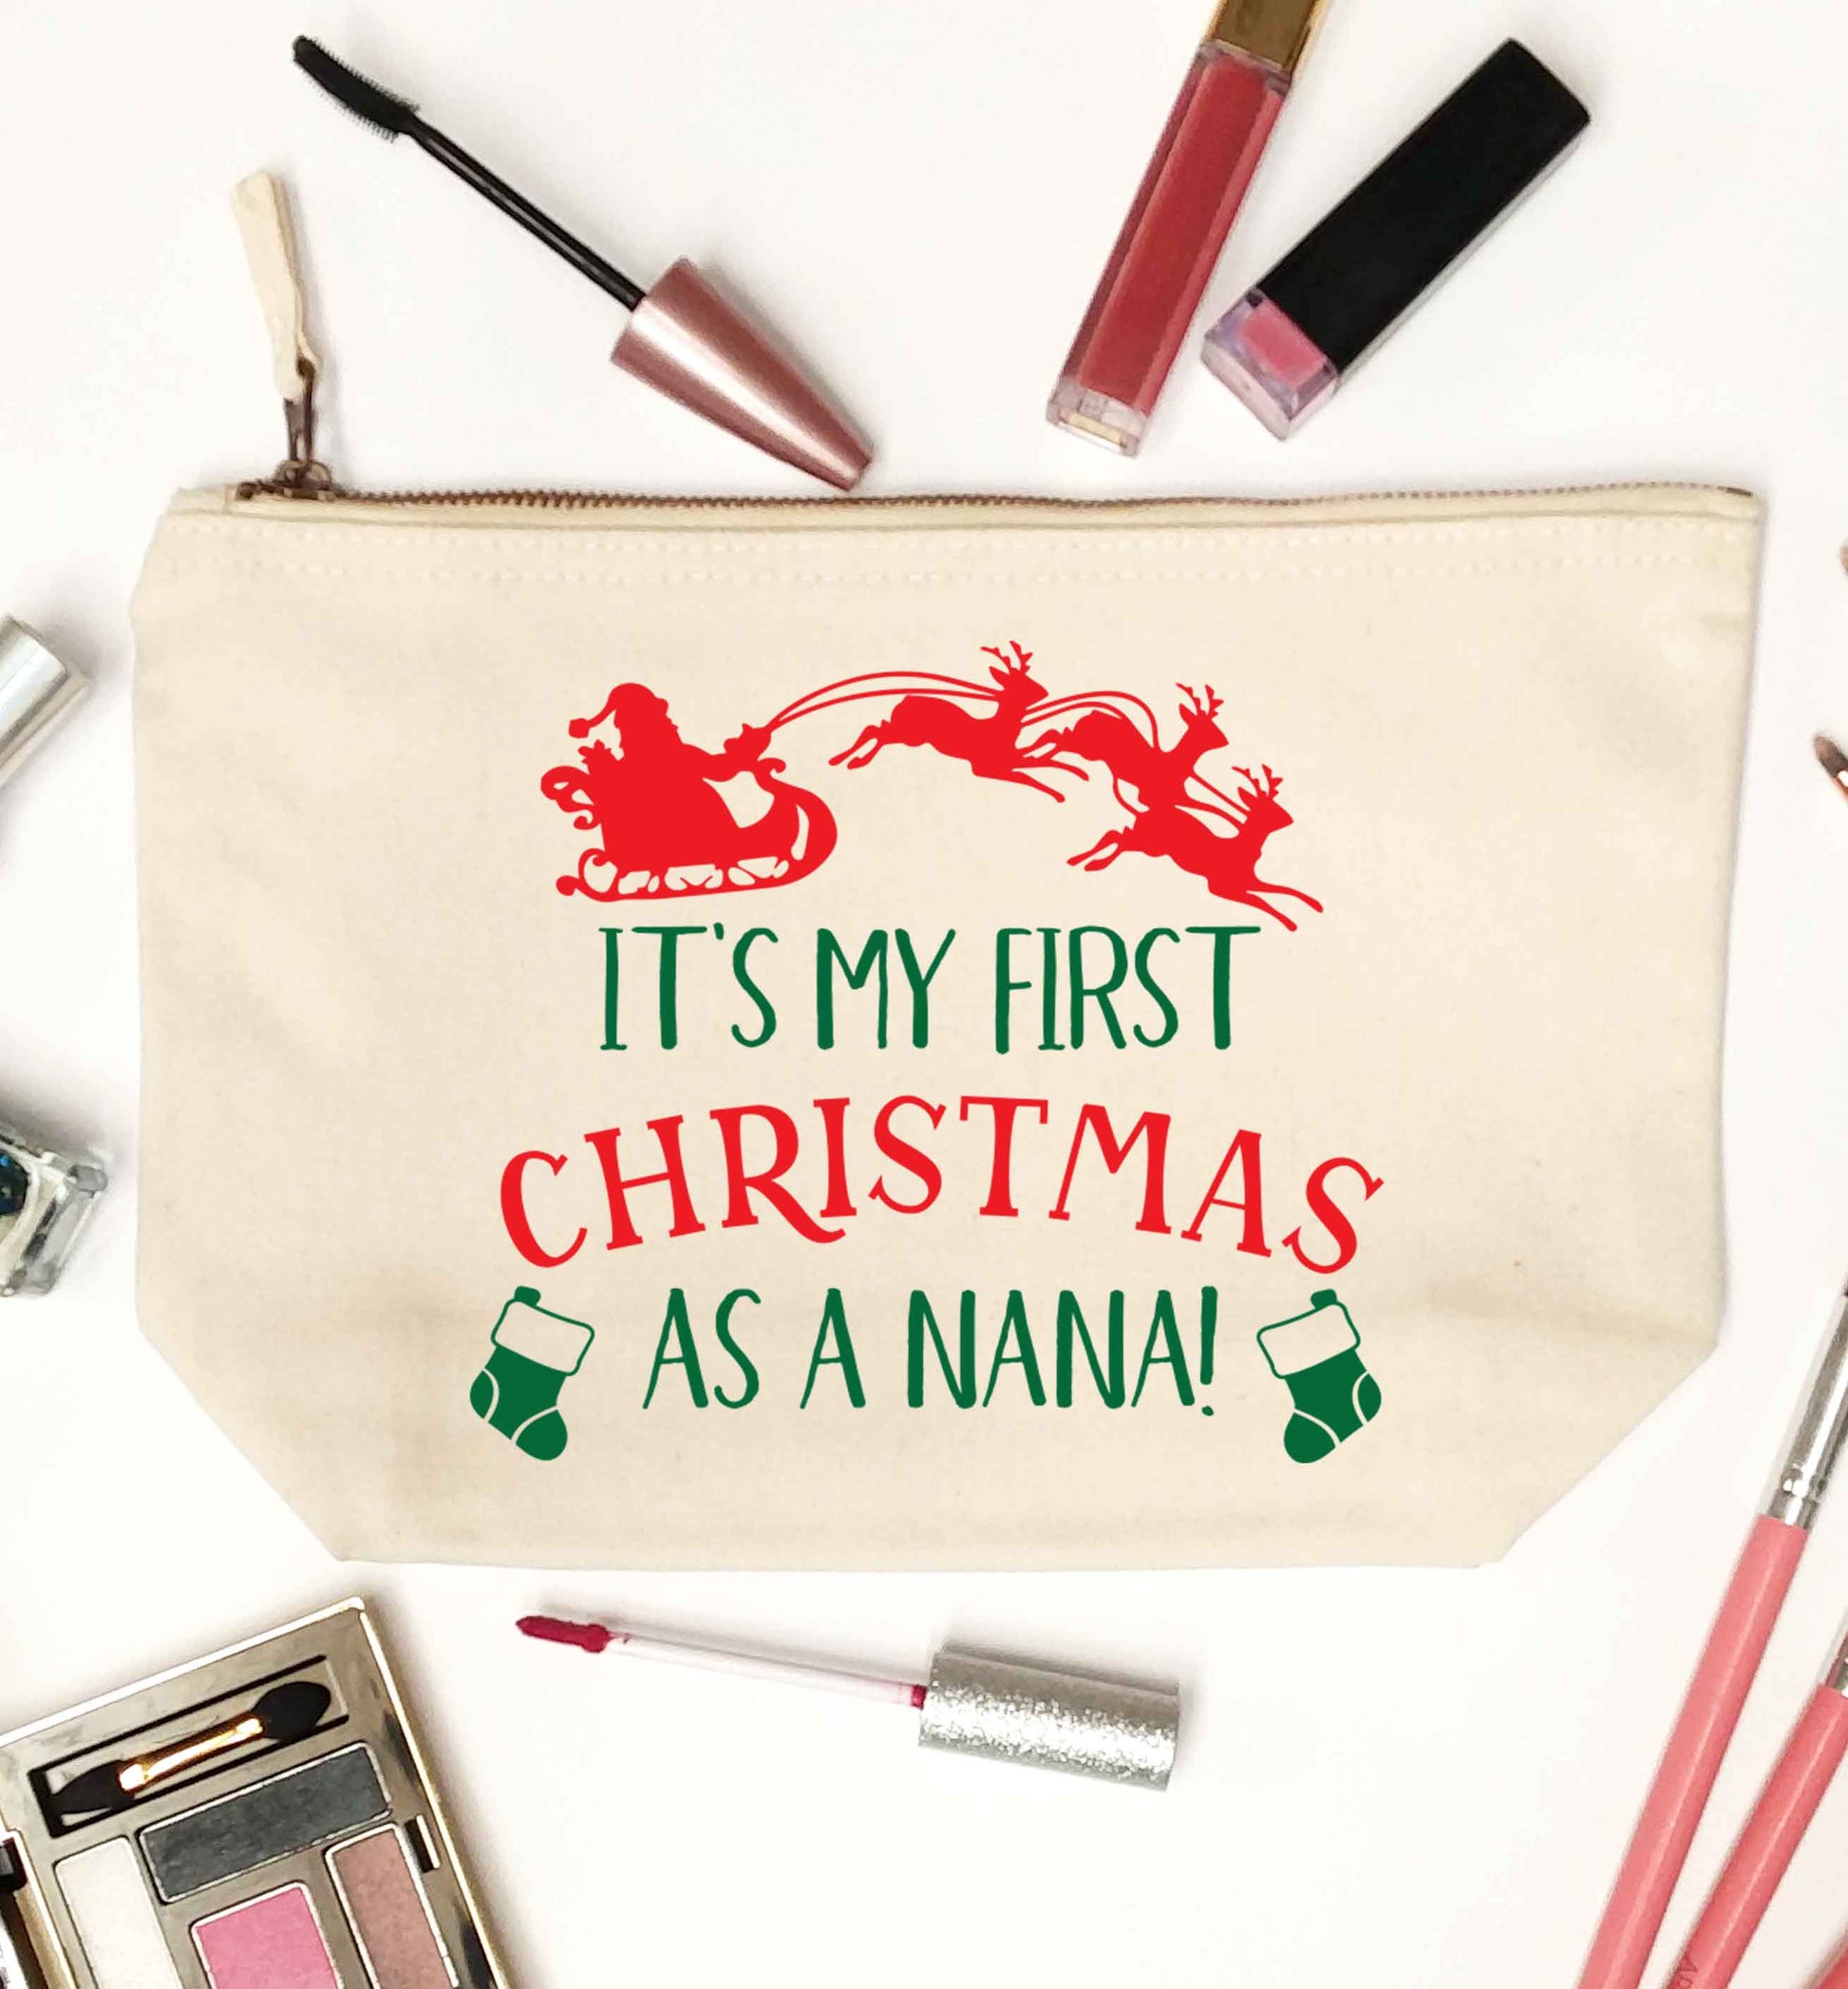 It's my first Christmas as a nana natural makeup bag